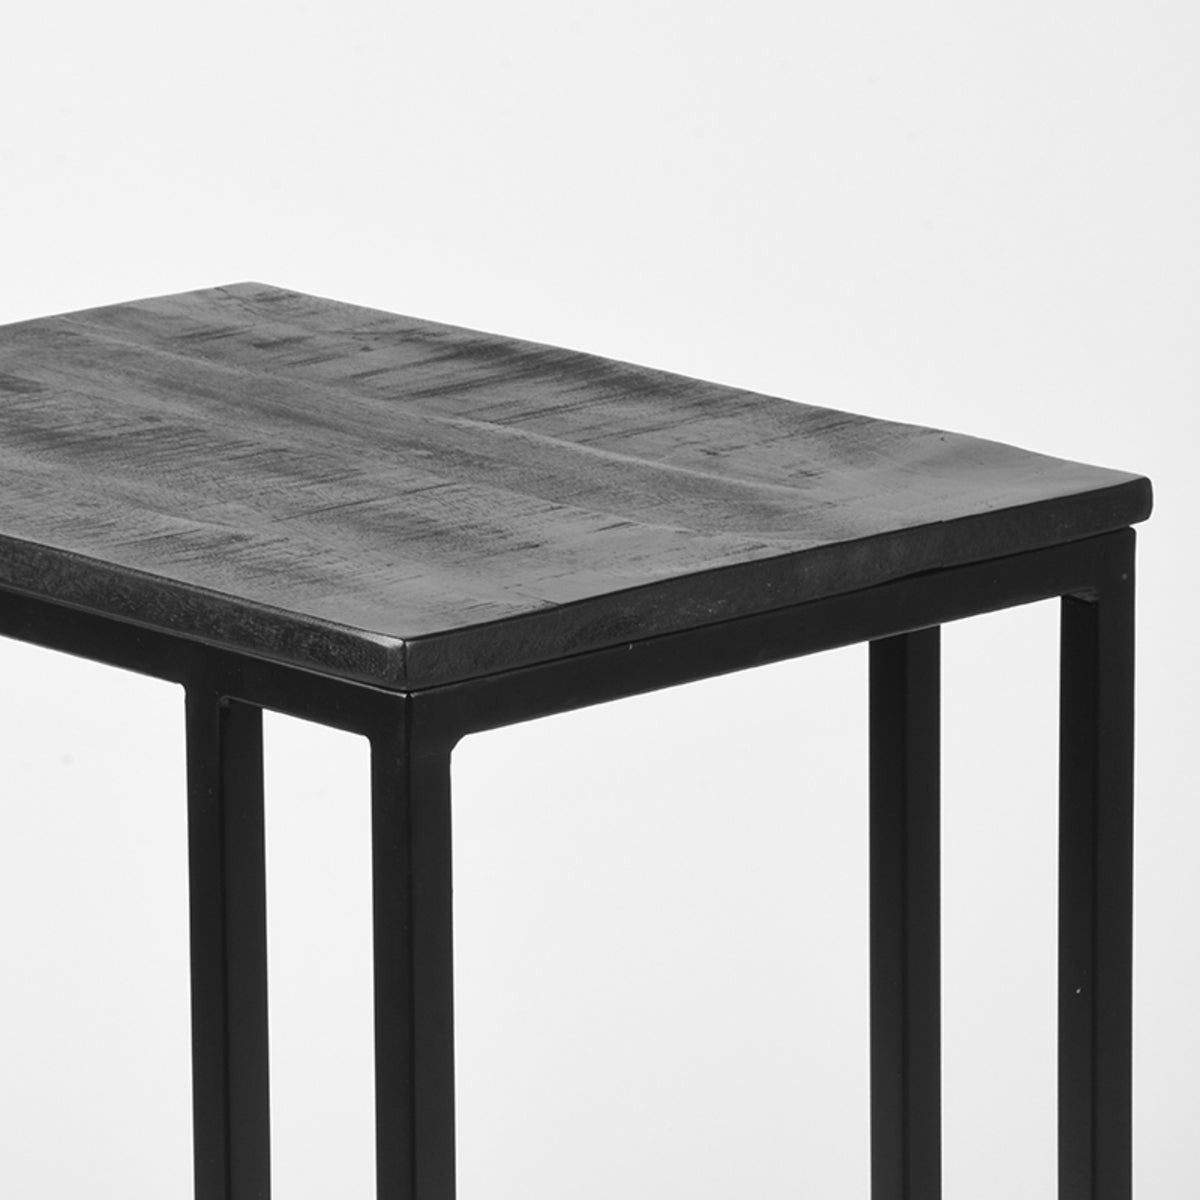 LABEL51 Move side table - Black - Mango wood